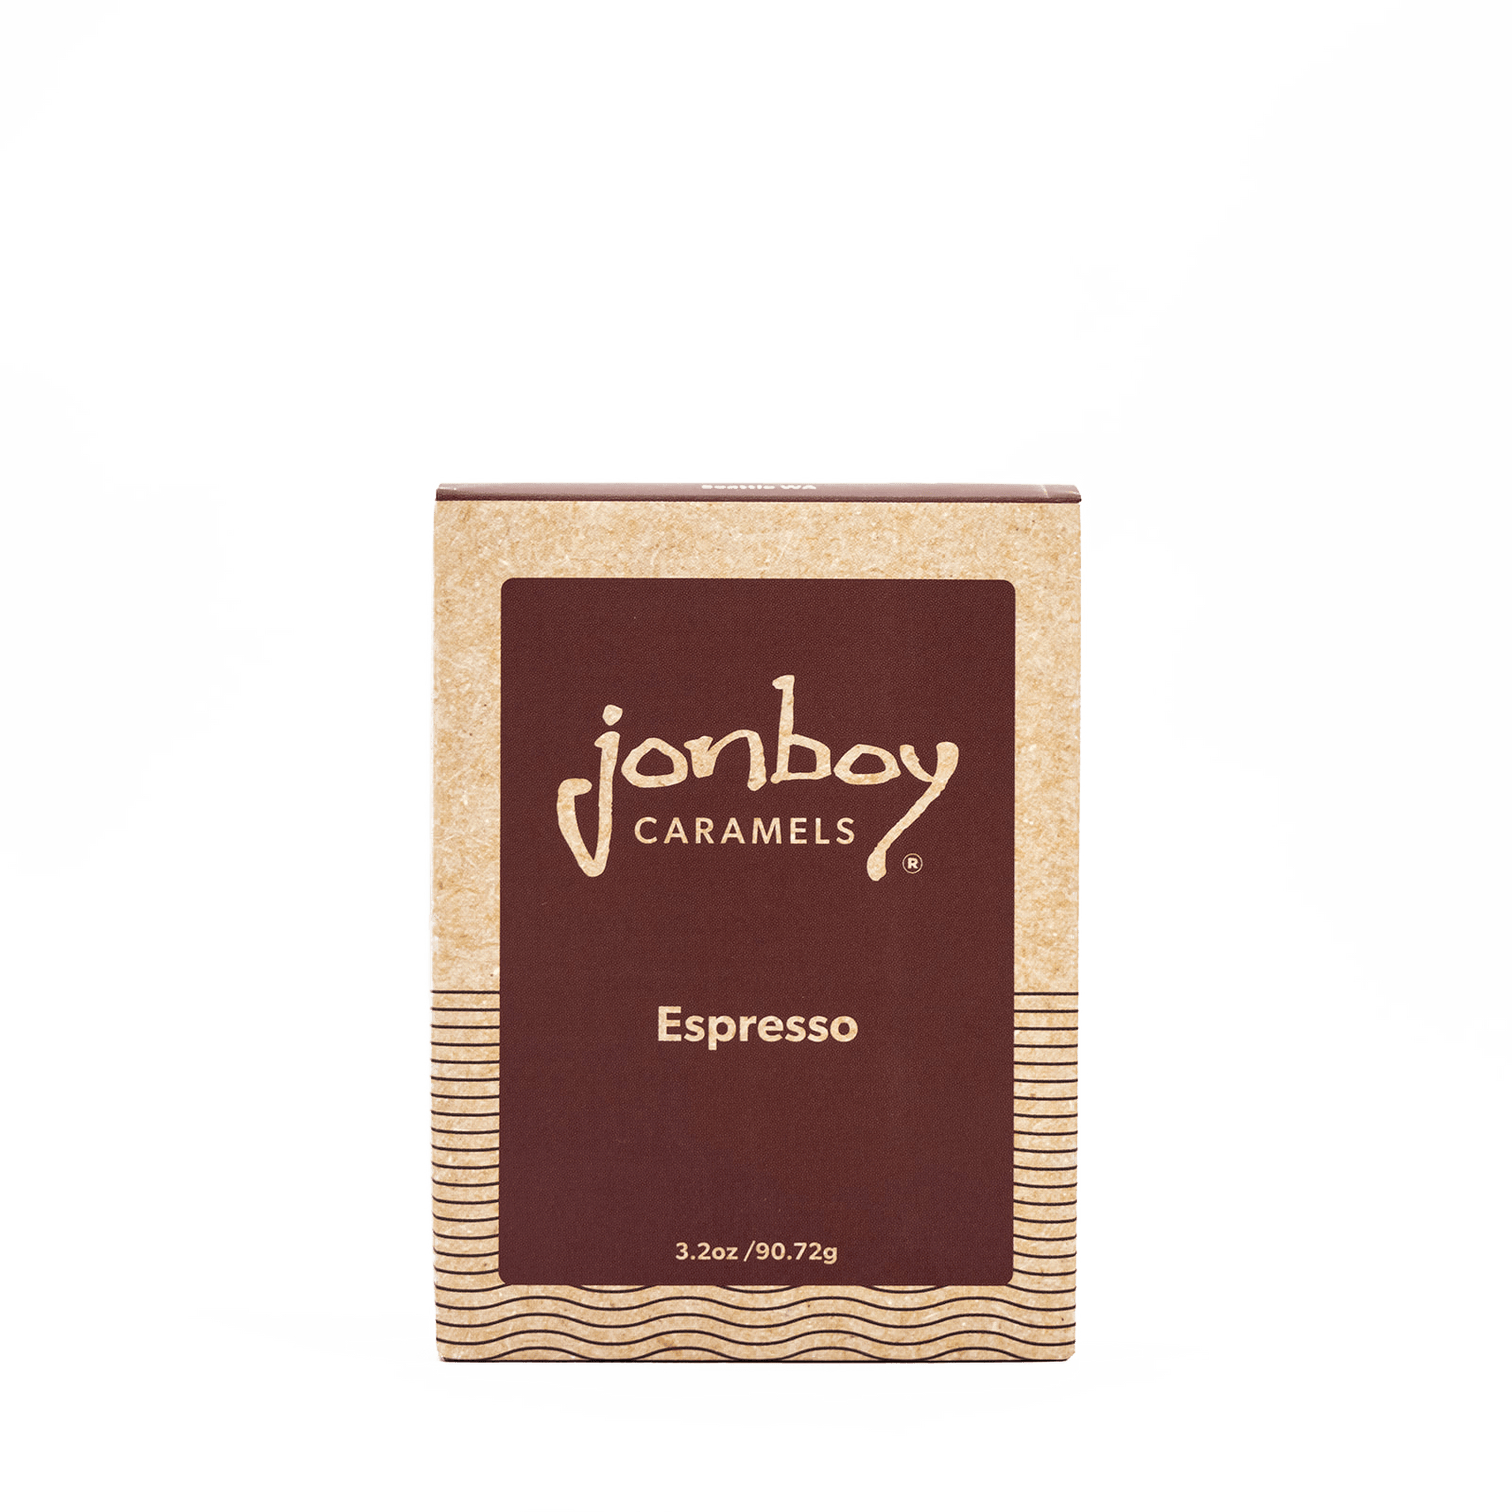 Jonboy Caramels - Apple Valley Emporium